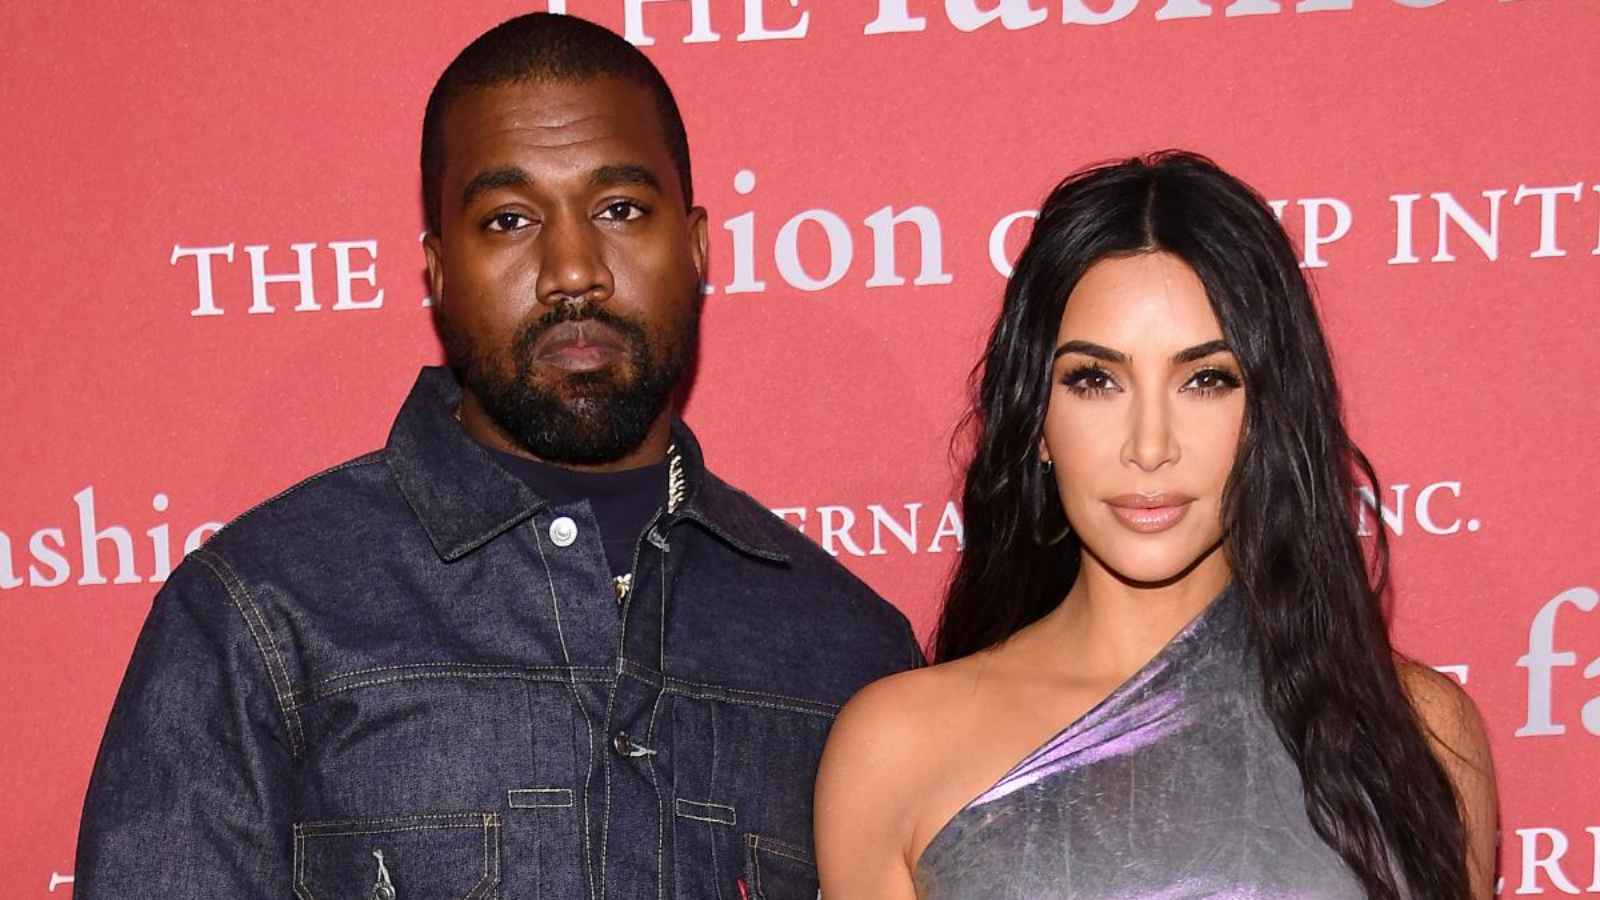 Kanye West and Kim Kardashian together